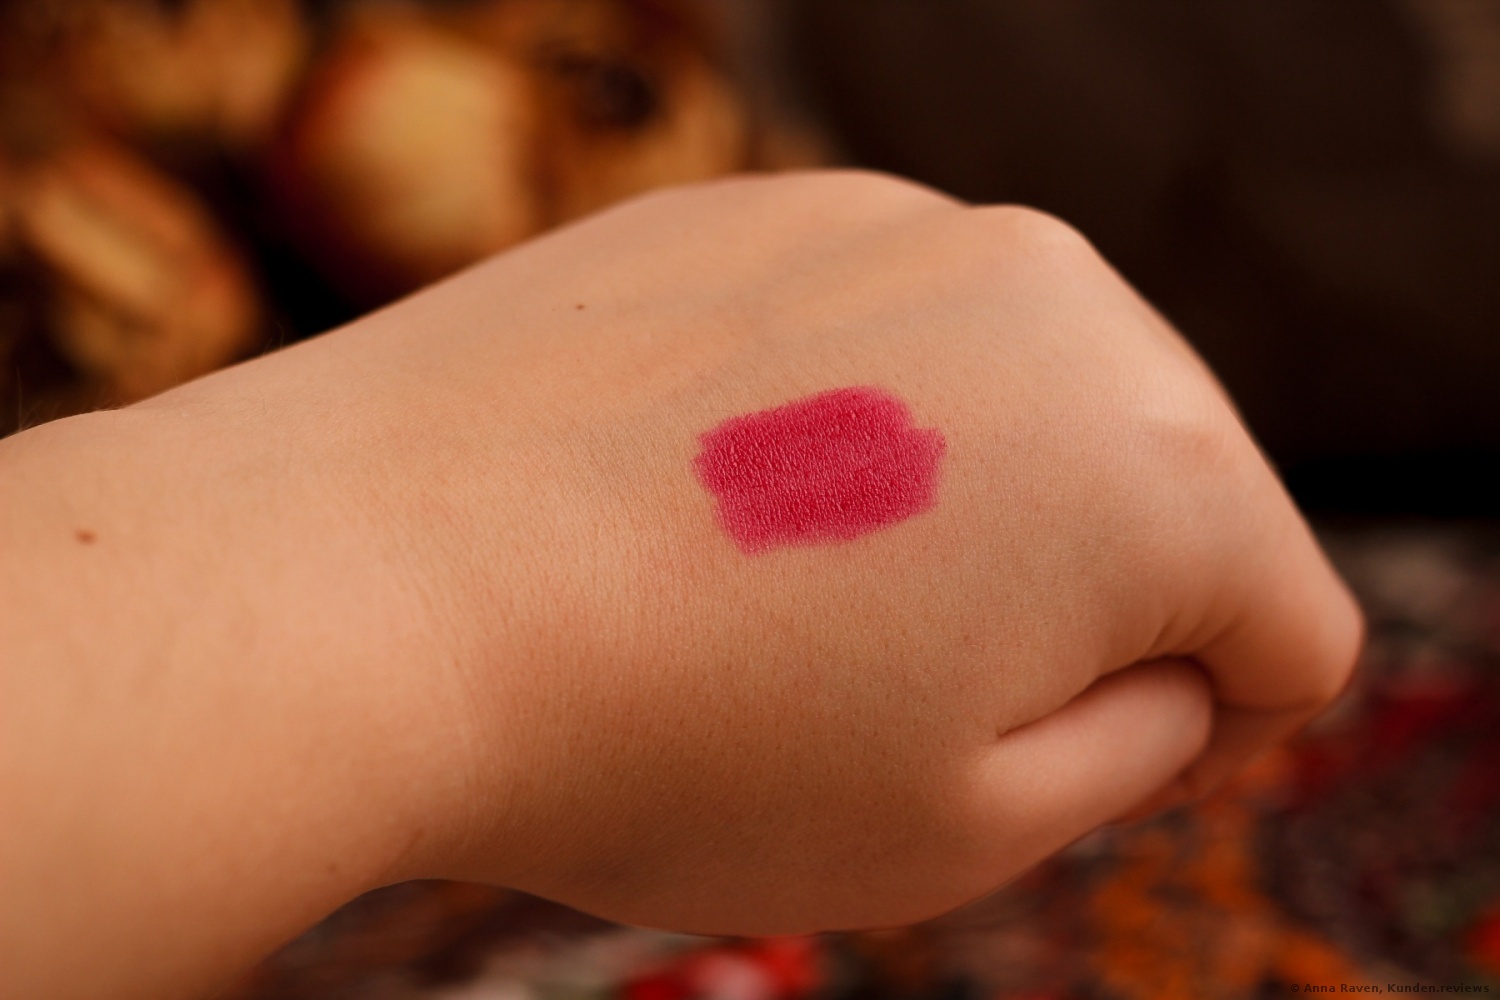 Lippenstift longlasting lipstick von Essence № 12 Blush my lips